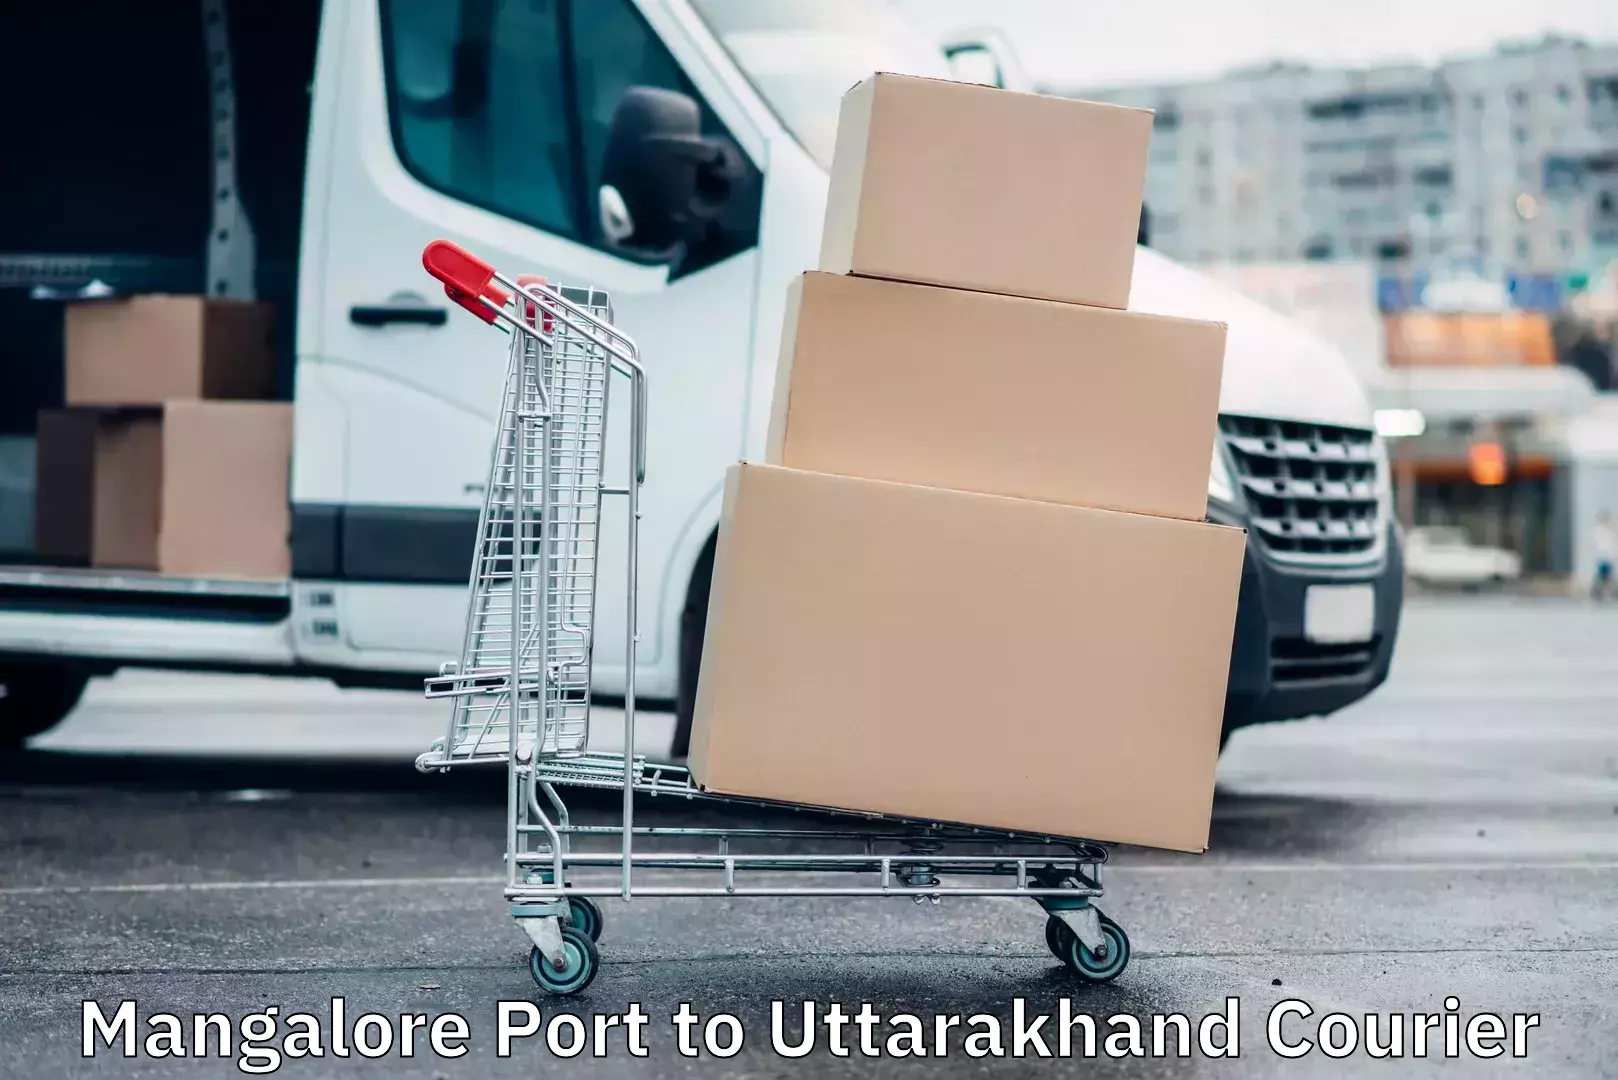 Overnight delivery services Mangalore Port to Uttarakhand